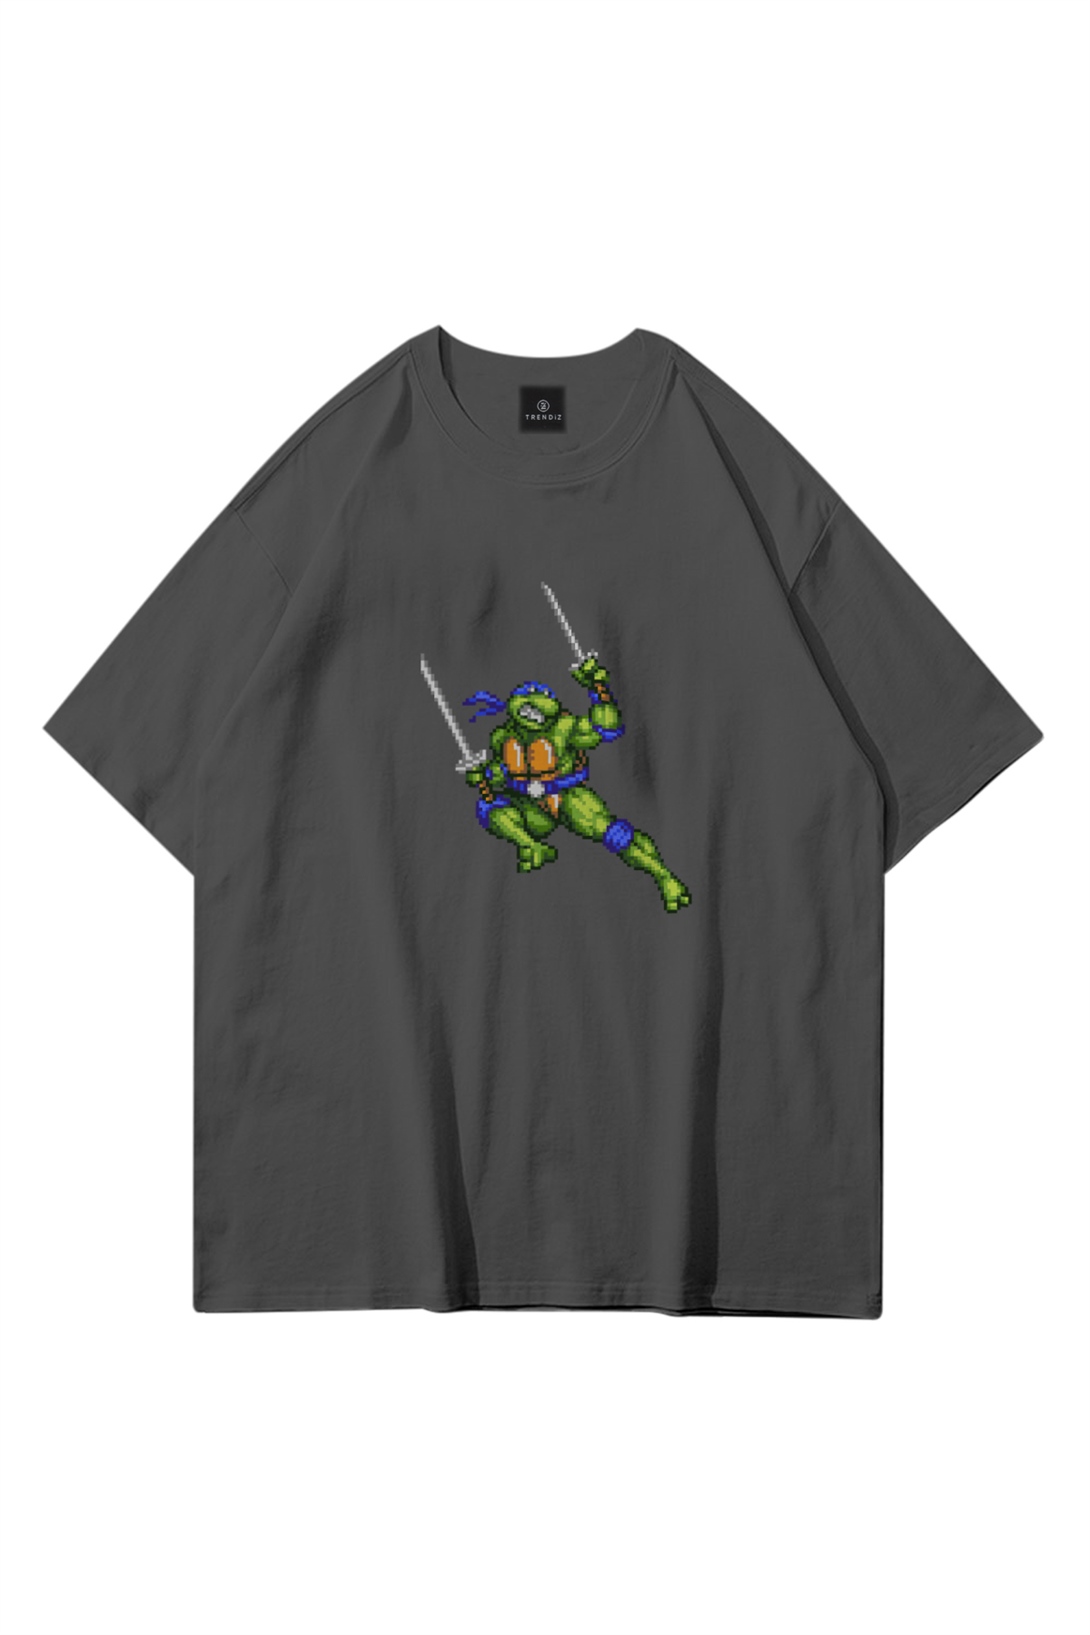 Trendiz Unisex Leonardo Ninja Turtles Antrasit Tshirt